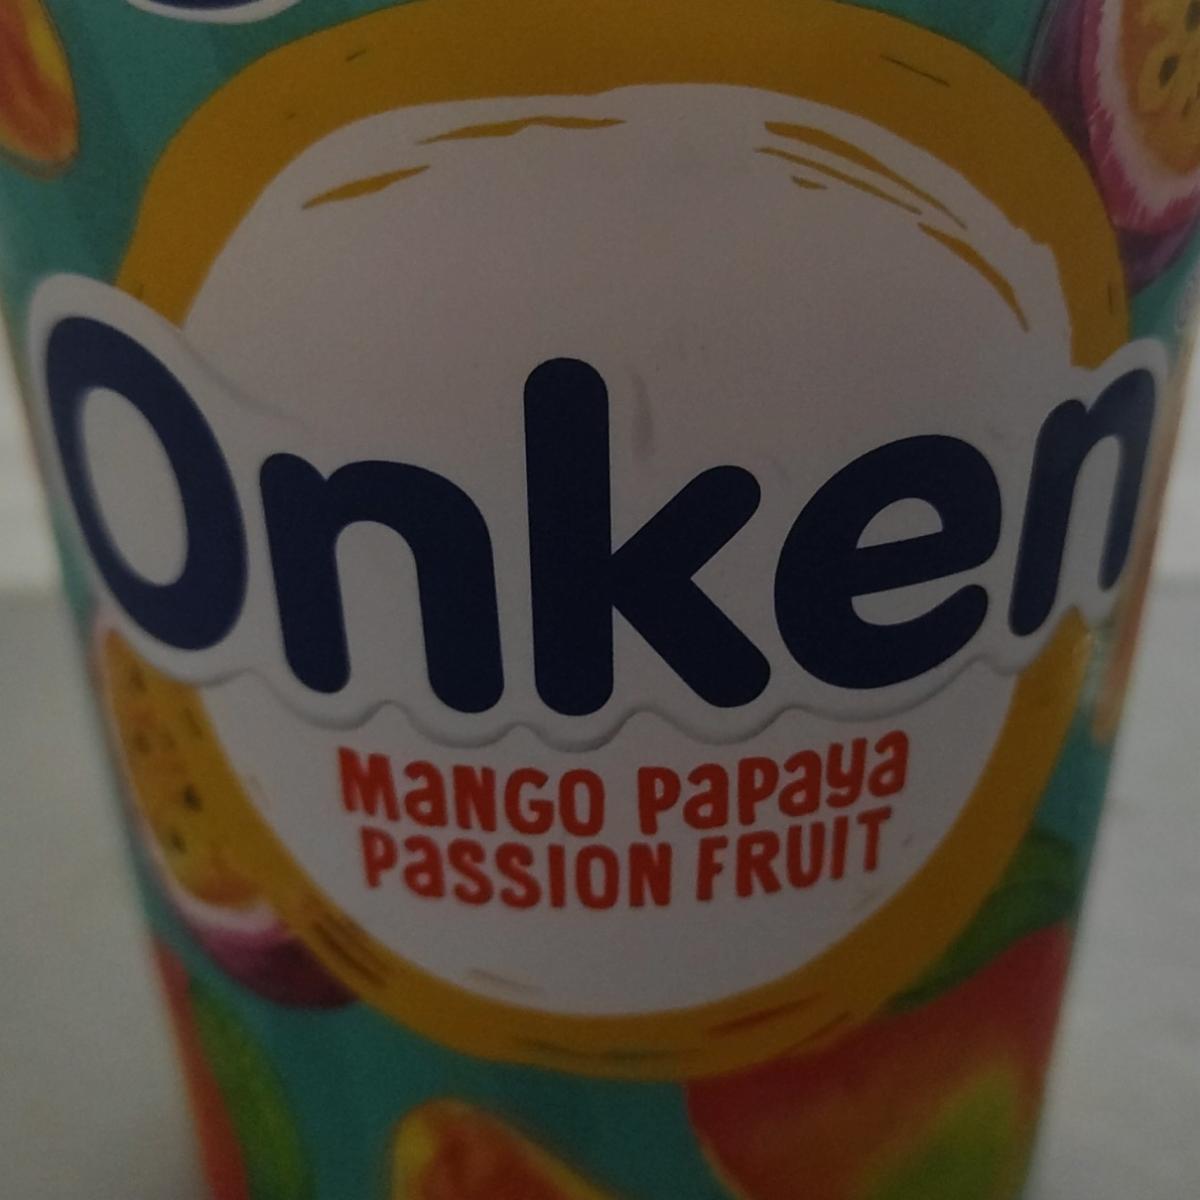 Фото - Mango papaya passion fruit Onken